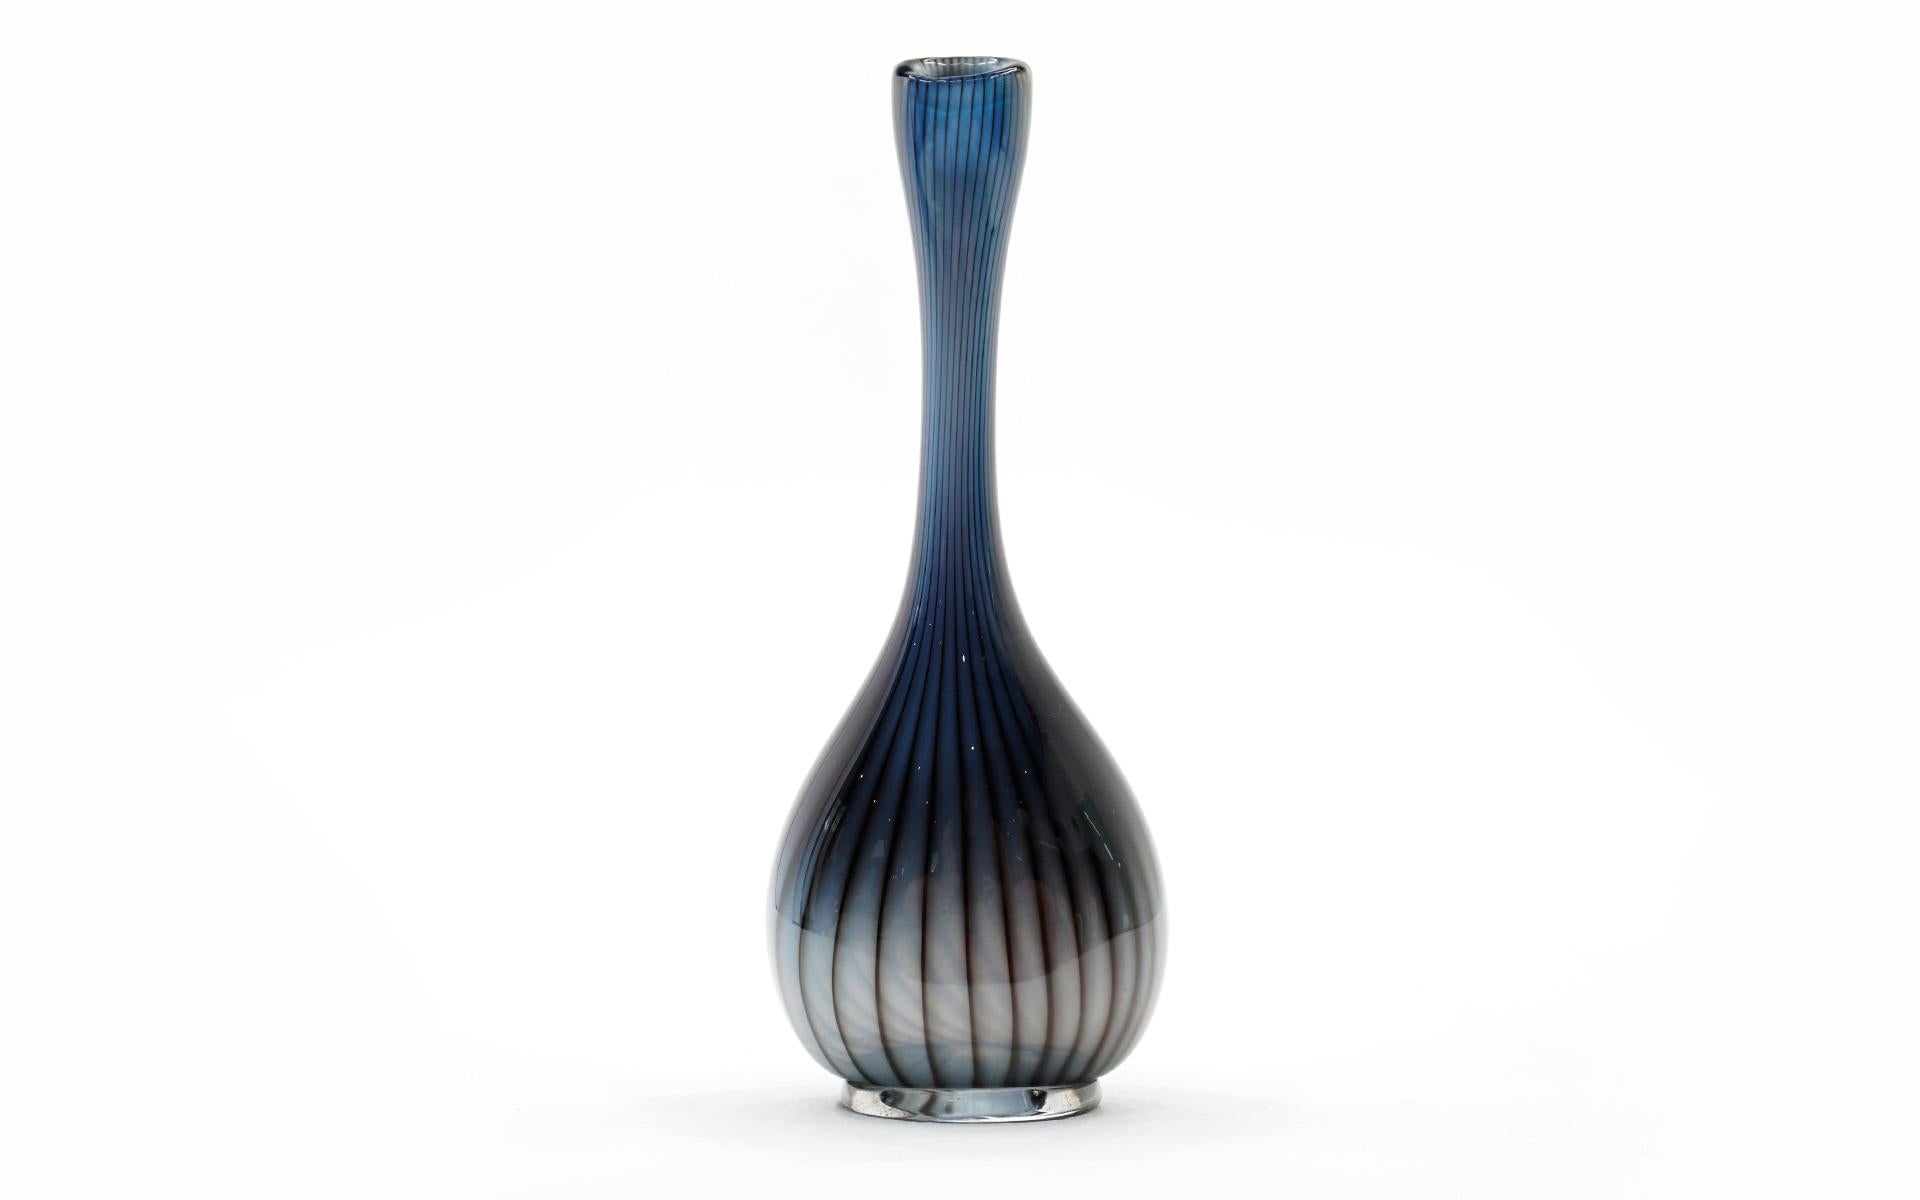 Swedish Mid-Century Modern Blue Bud Art glass vase by Swedish glass artist Vicke Lindstrand for Kosta Boda circa 1950. From the 